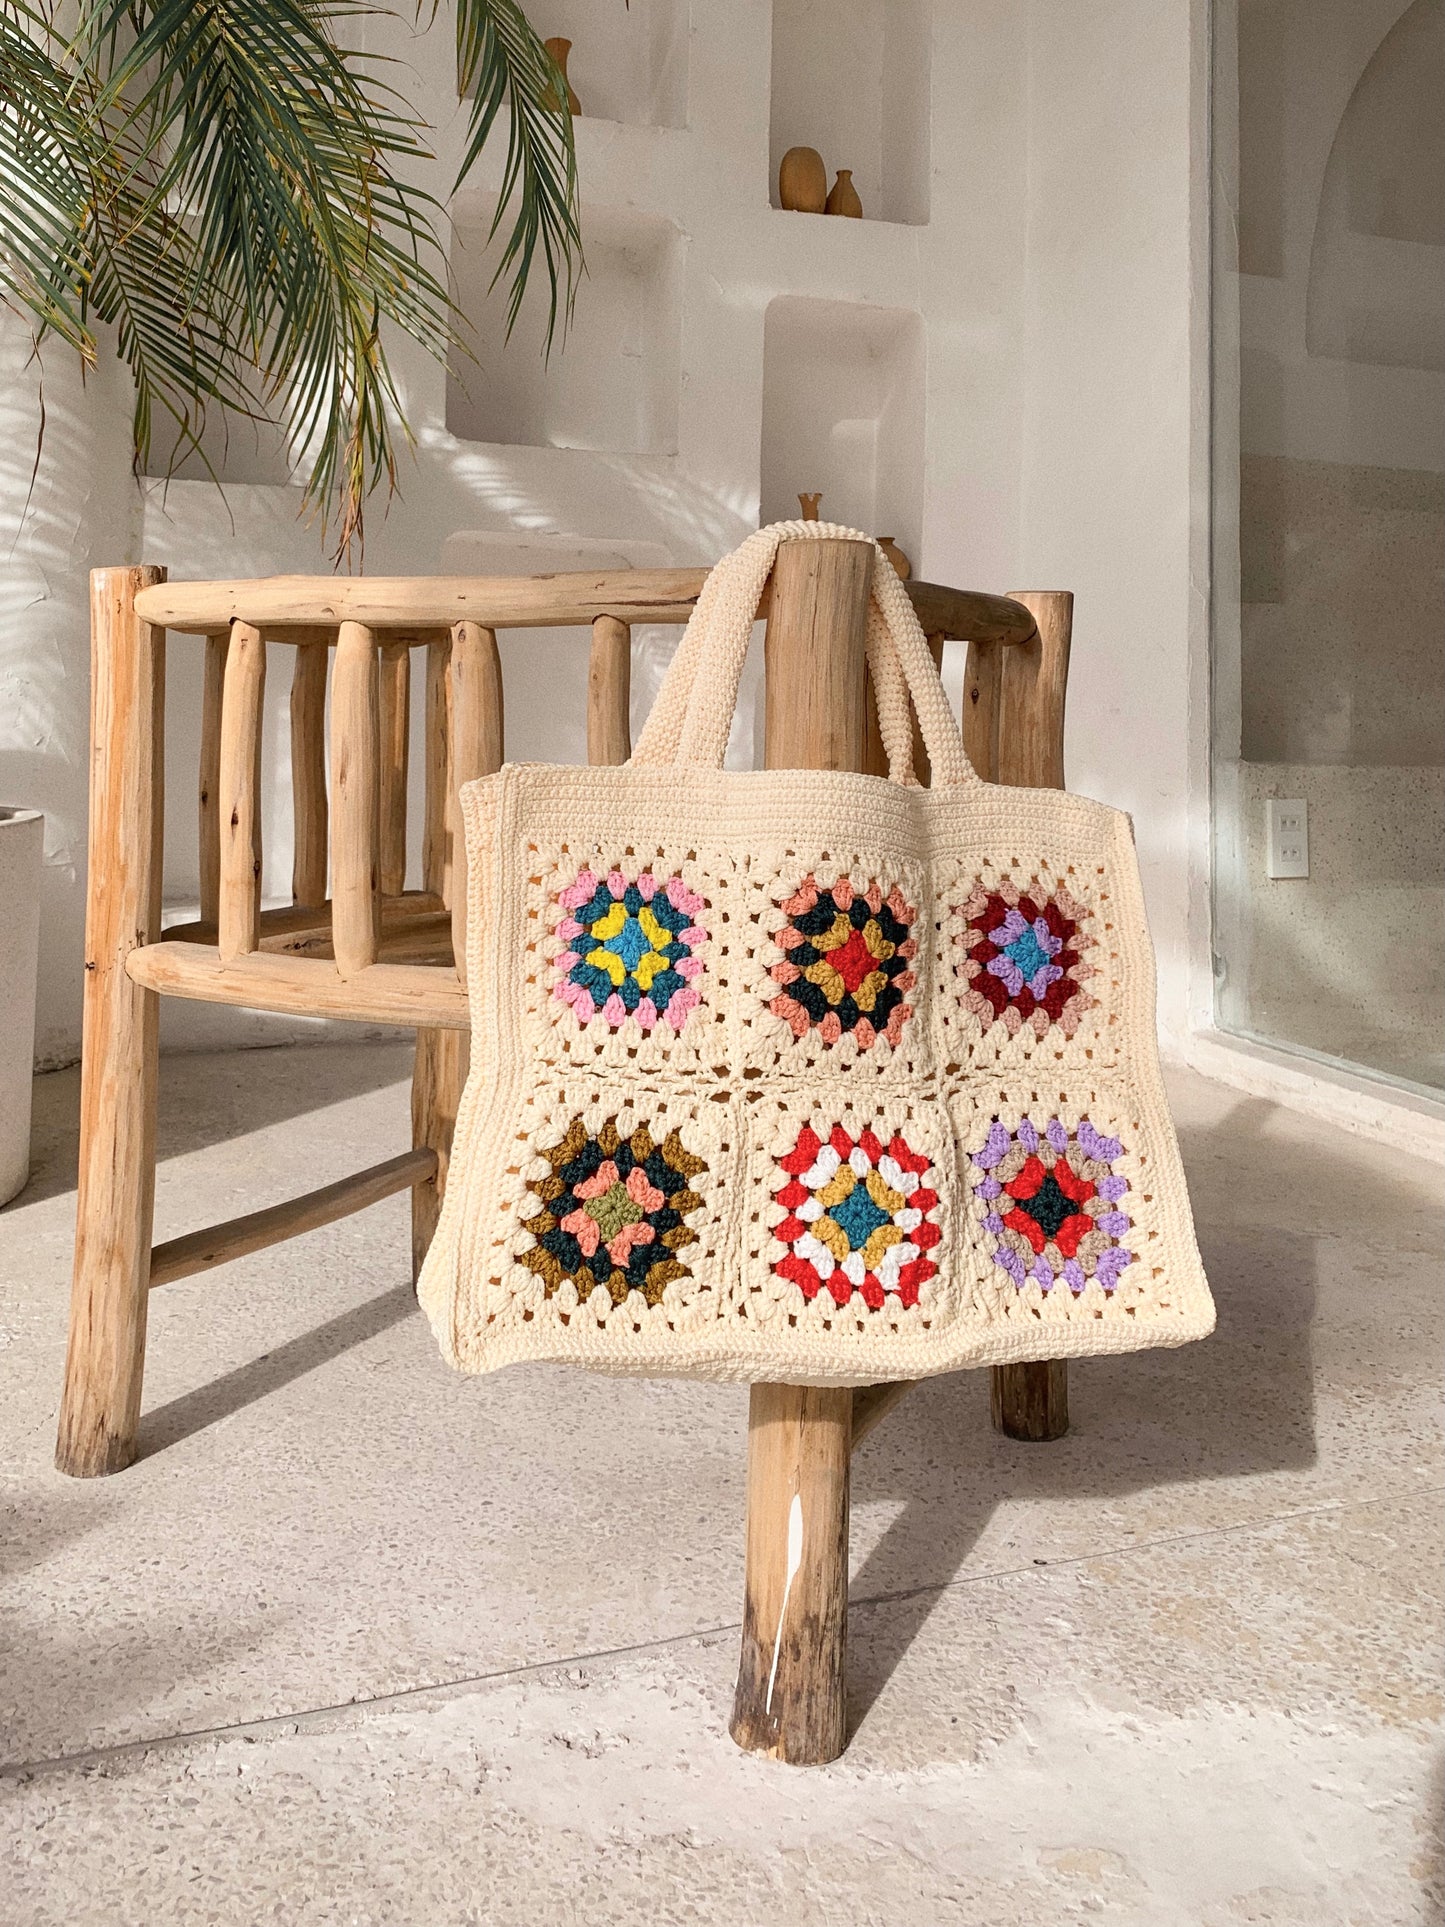 Square Crochet Bag